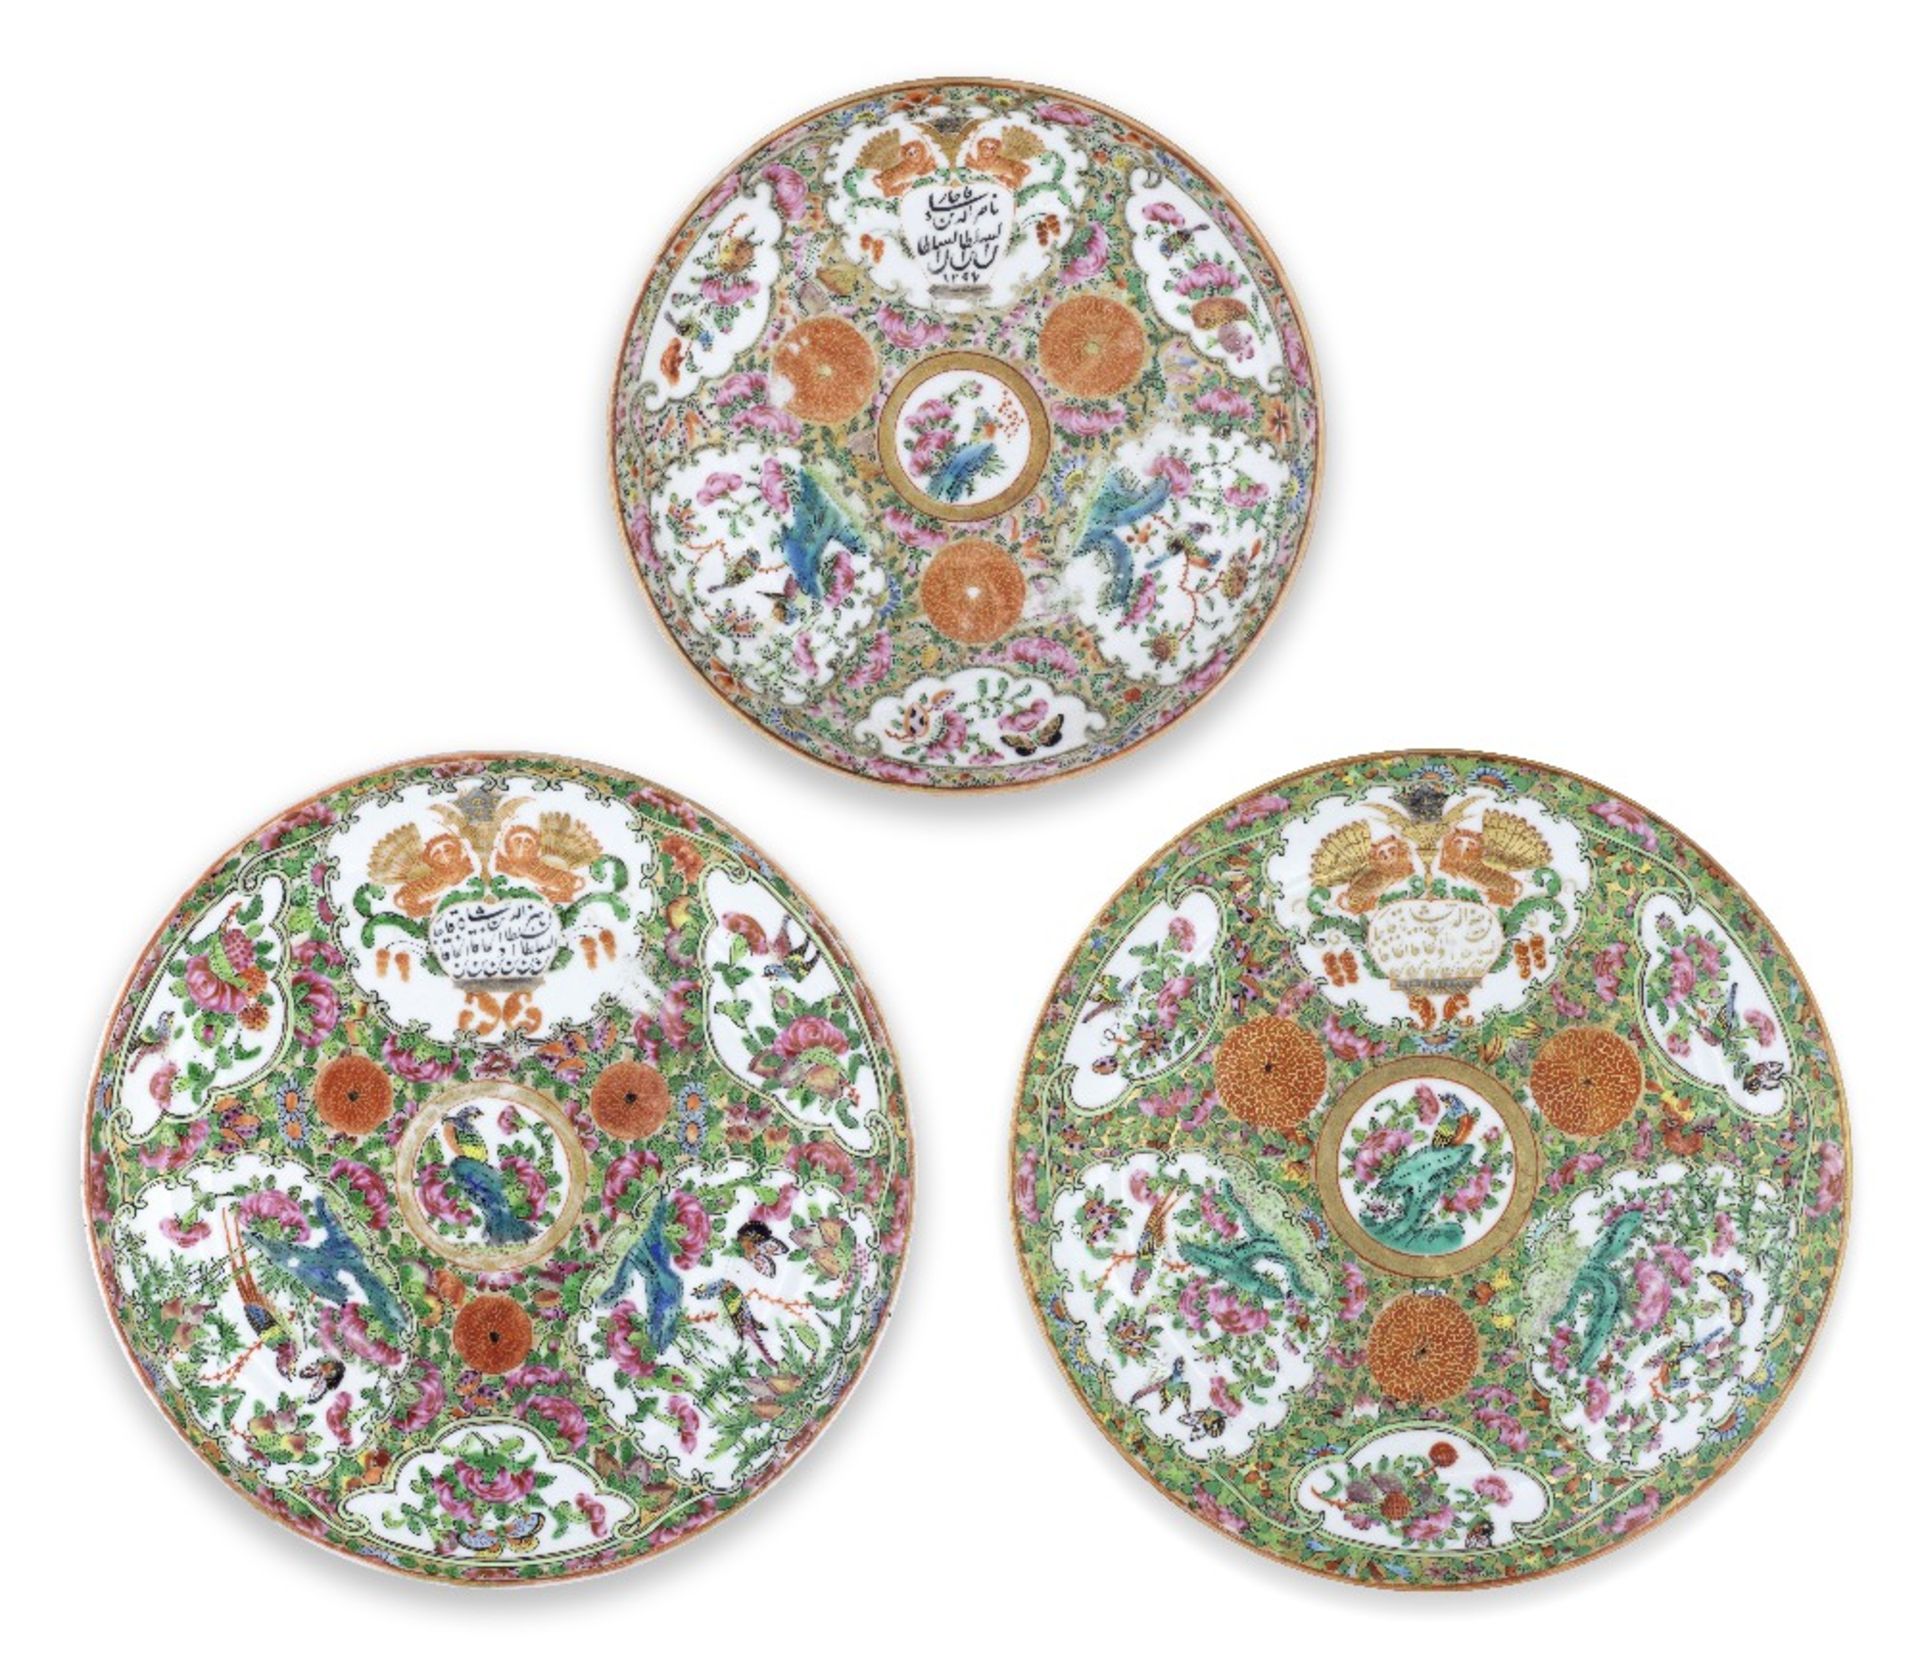 Three Cantonese export porcelain dishes made for Nasr al-Din Shah Qajar (reg.1848-1896) China, o...